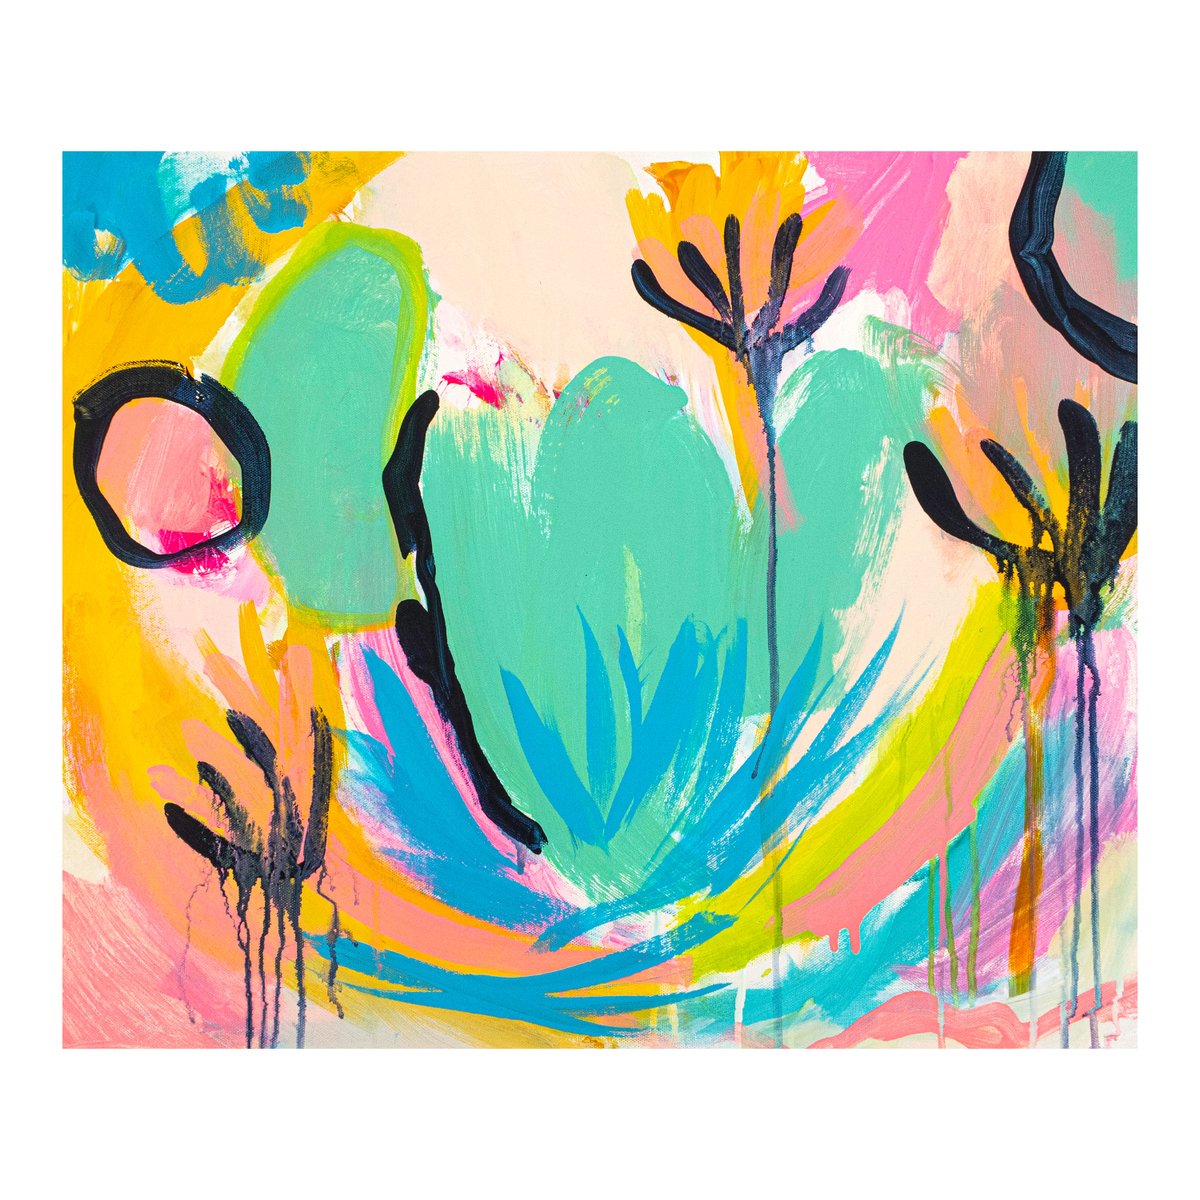 I've just added a new artwork, 'Primavera' to my @artfinder shop via @artfinder #acrylic #painting #art artfinder.com/product/primav… @artfinderlatest #abstractflorals #abstractart #flowers #SpringEquinox